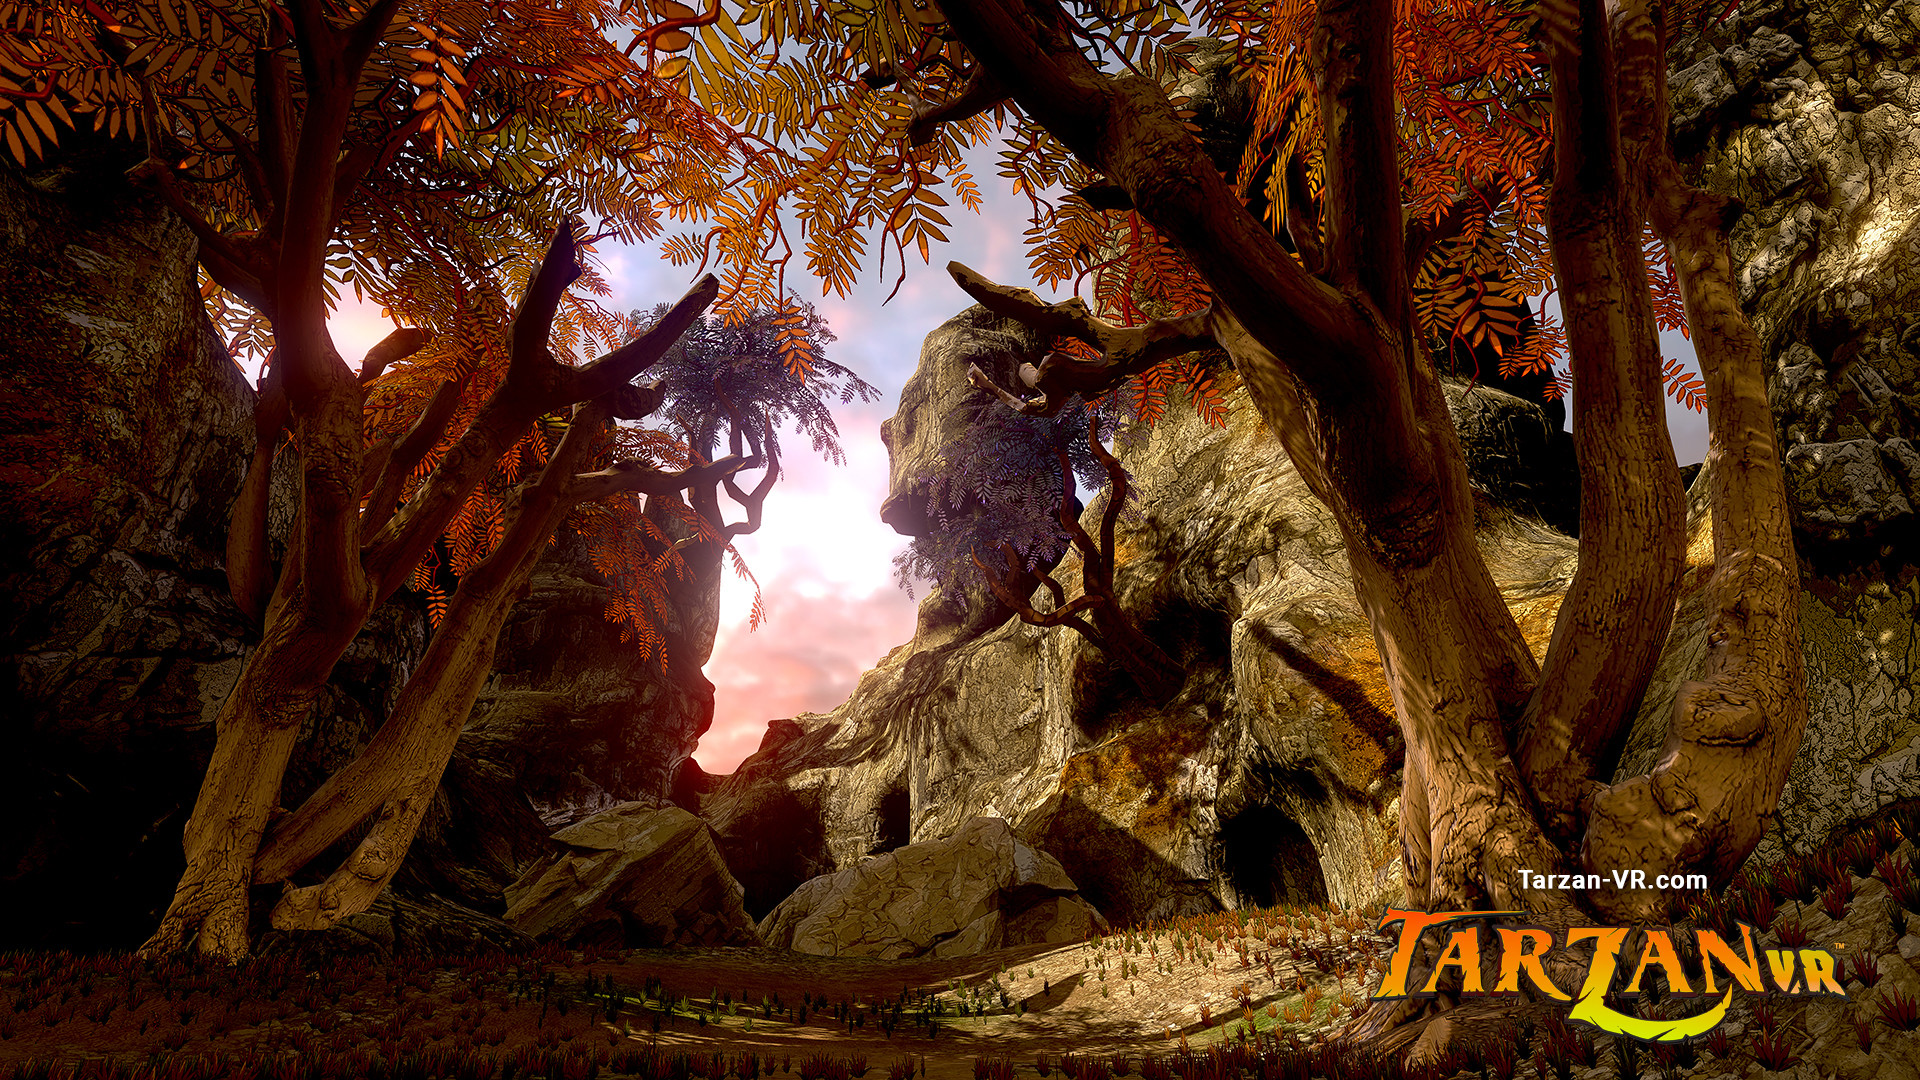 Tarzan VR,  Issue #2 - THE JAGGED EDGE screenshot